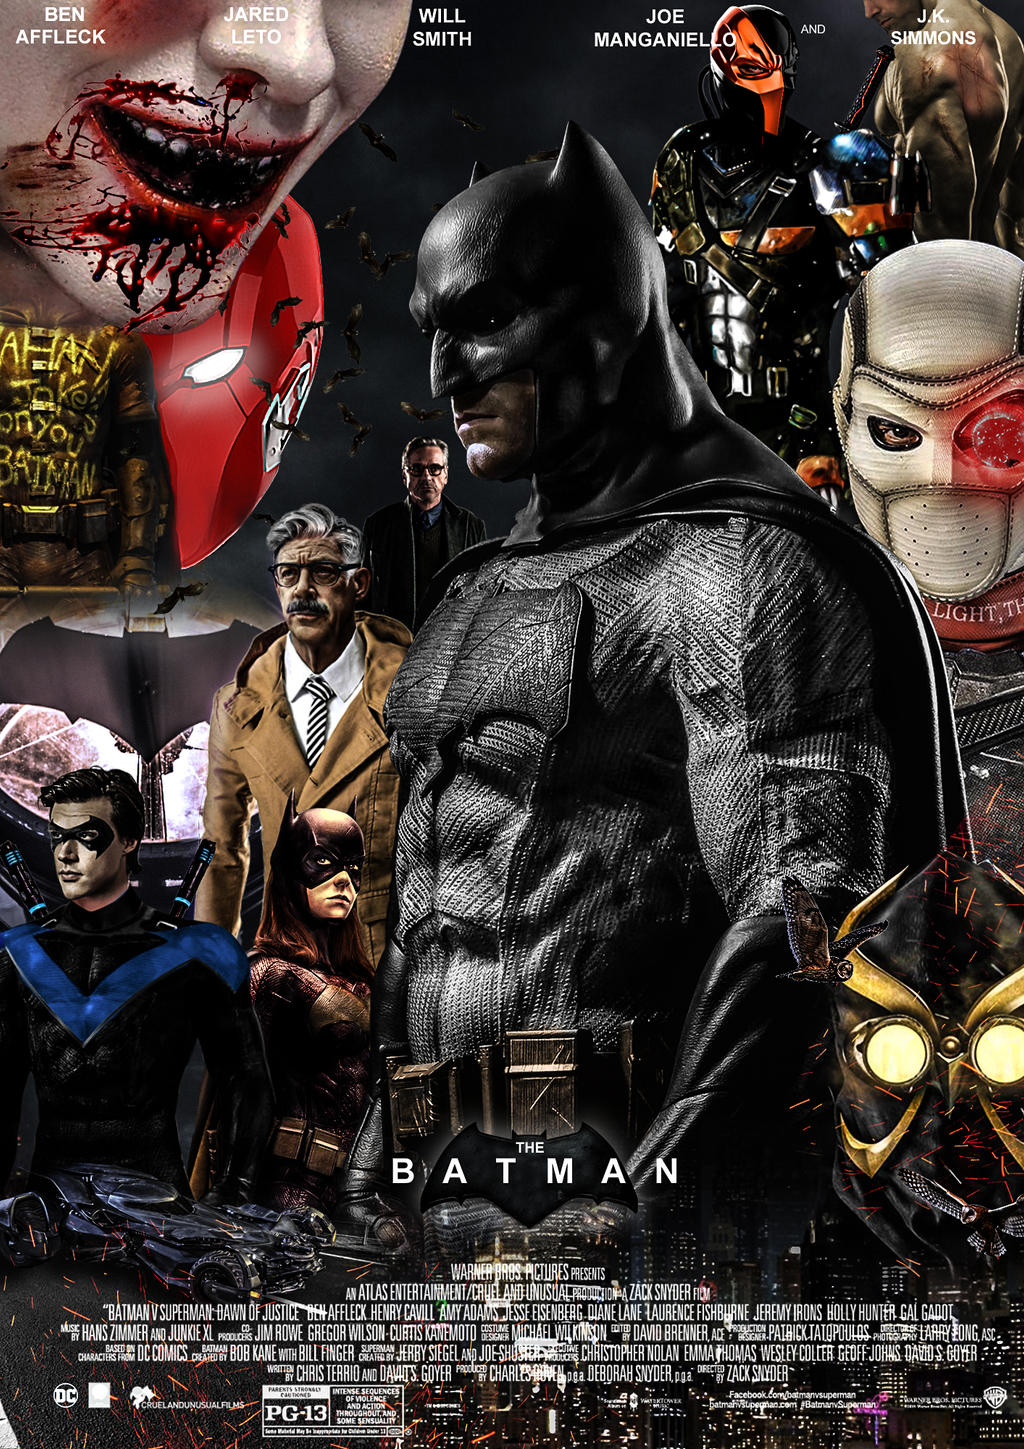 The Batman Ben Affleck Movie Poster by halilfurkanaydin on DeviantArt